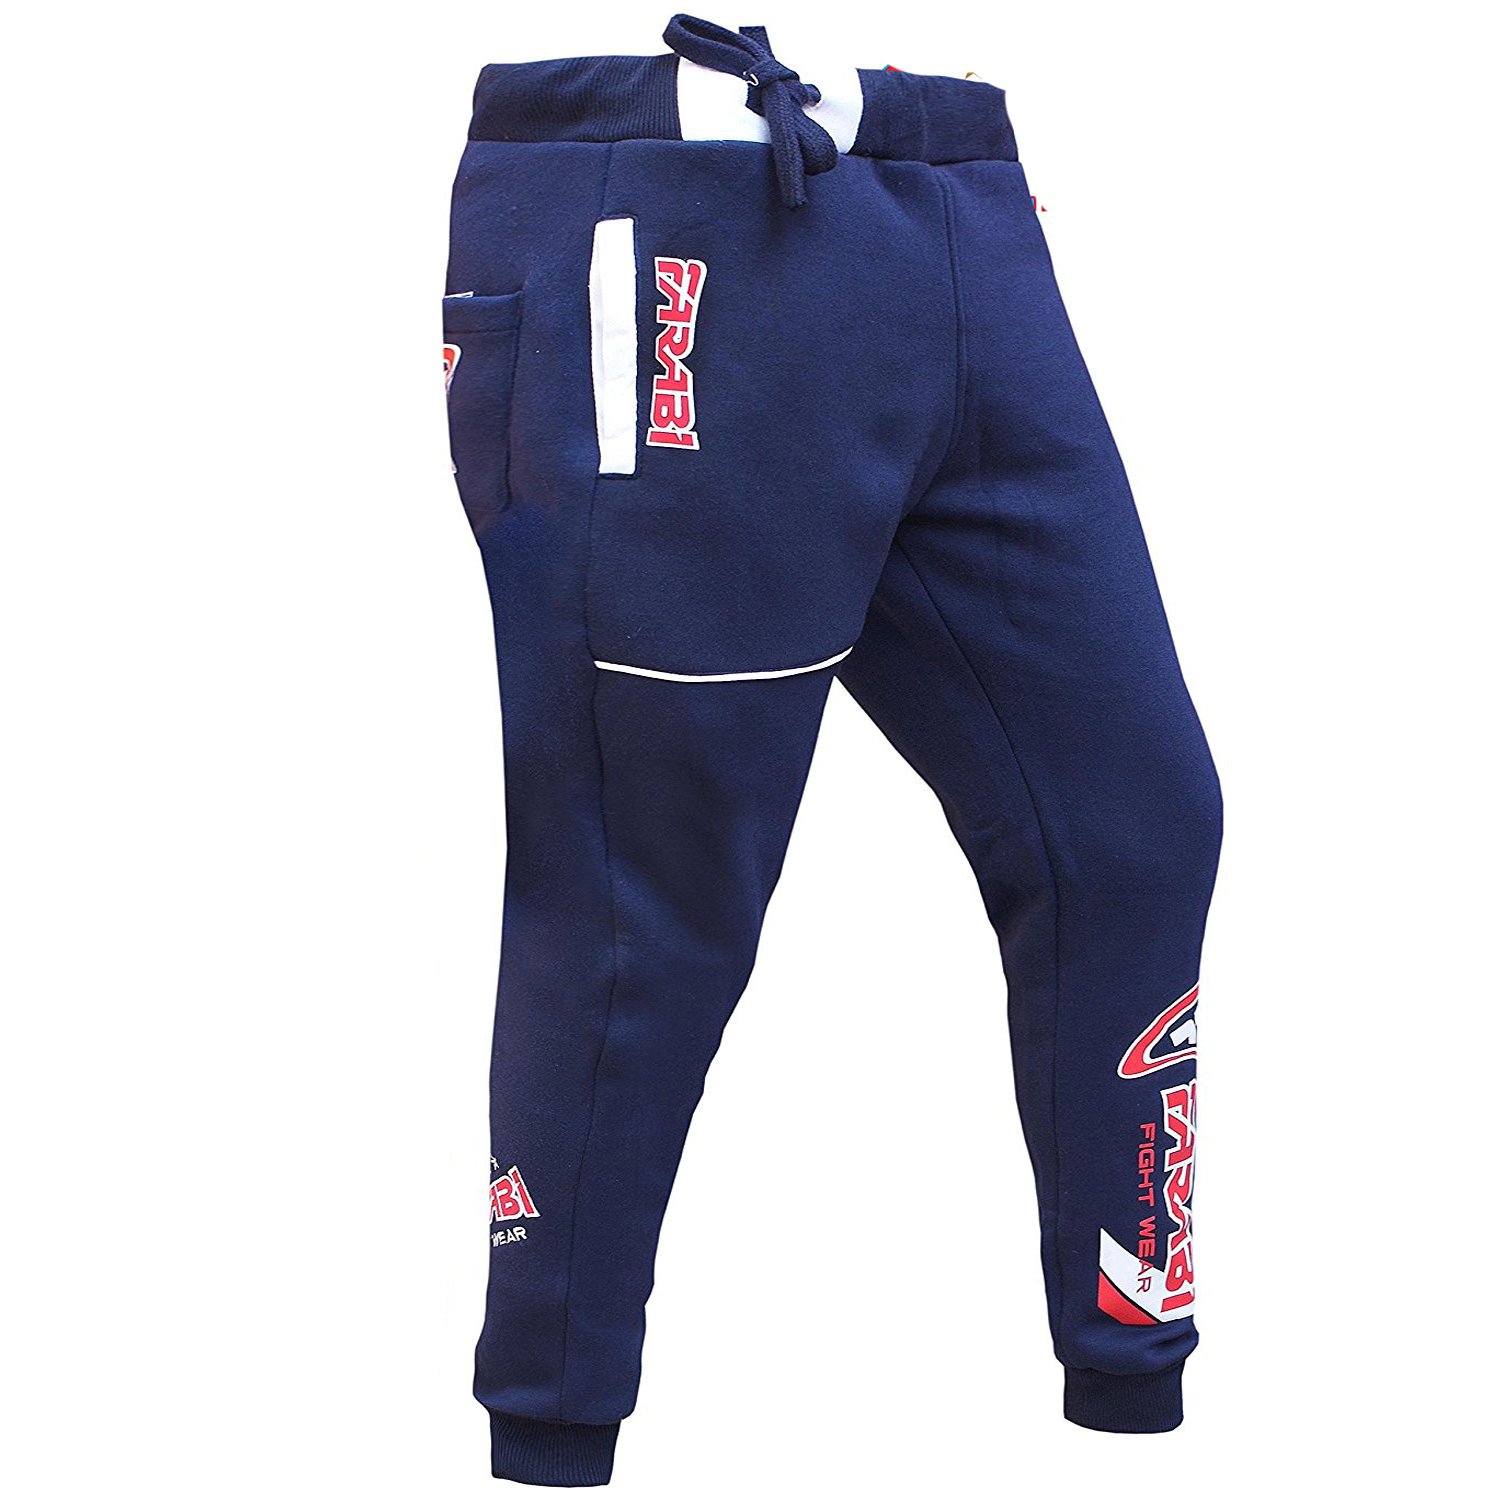 Farabi Fleece Bottom Trouser Jogging Sports Casual Pants Training Navy Blue (XXXX-S)